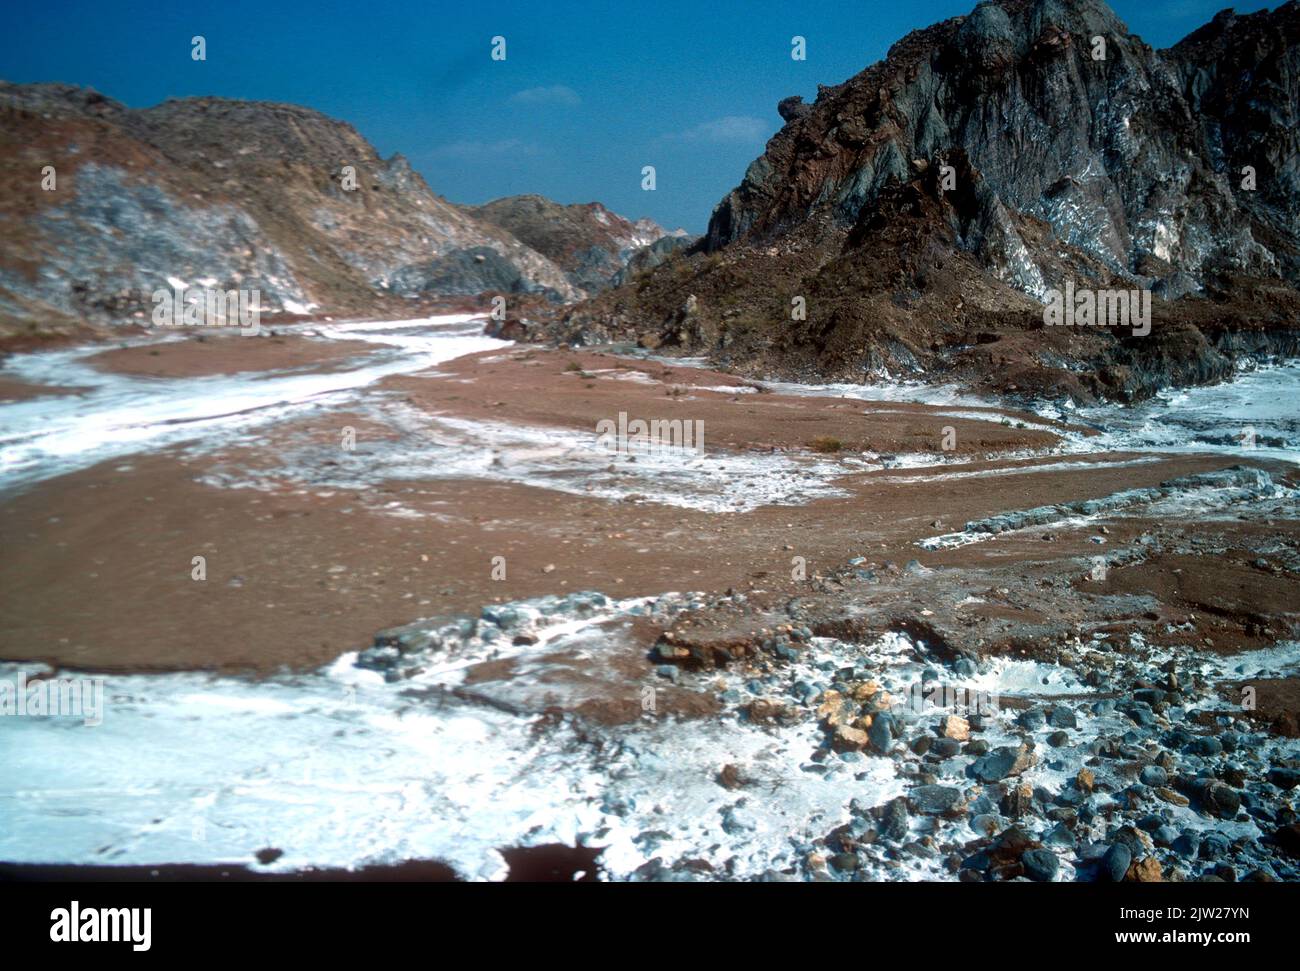 Río de la sal, Kerak district Khyber Puktunwala Pakistán, 1979 Foto de stock